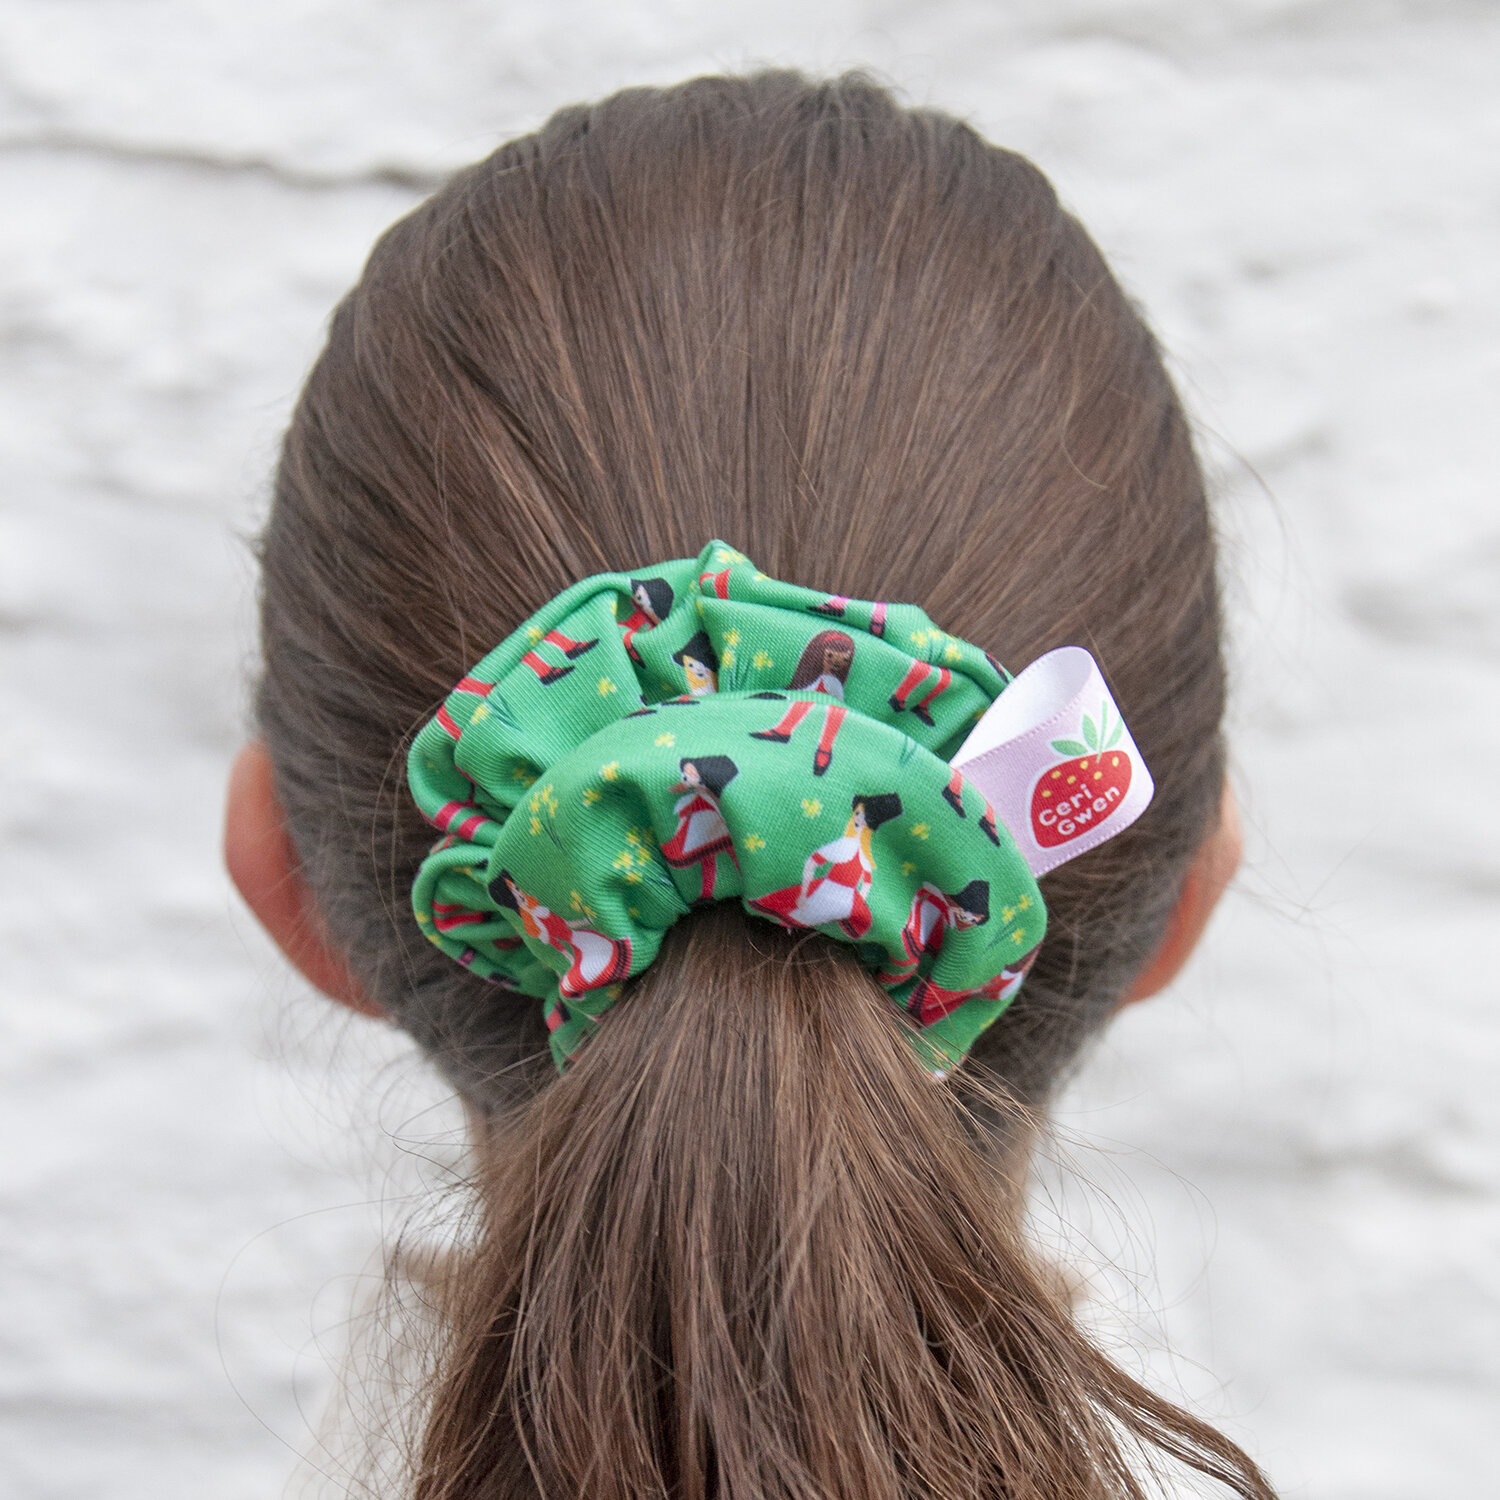 Welsh Girl scrunchie